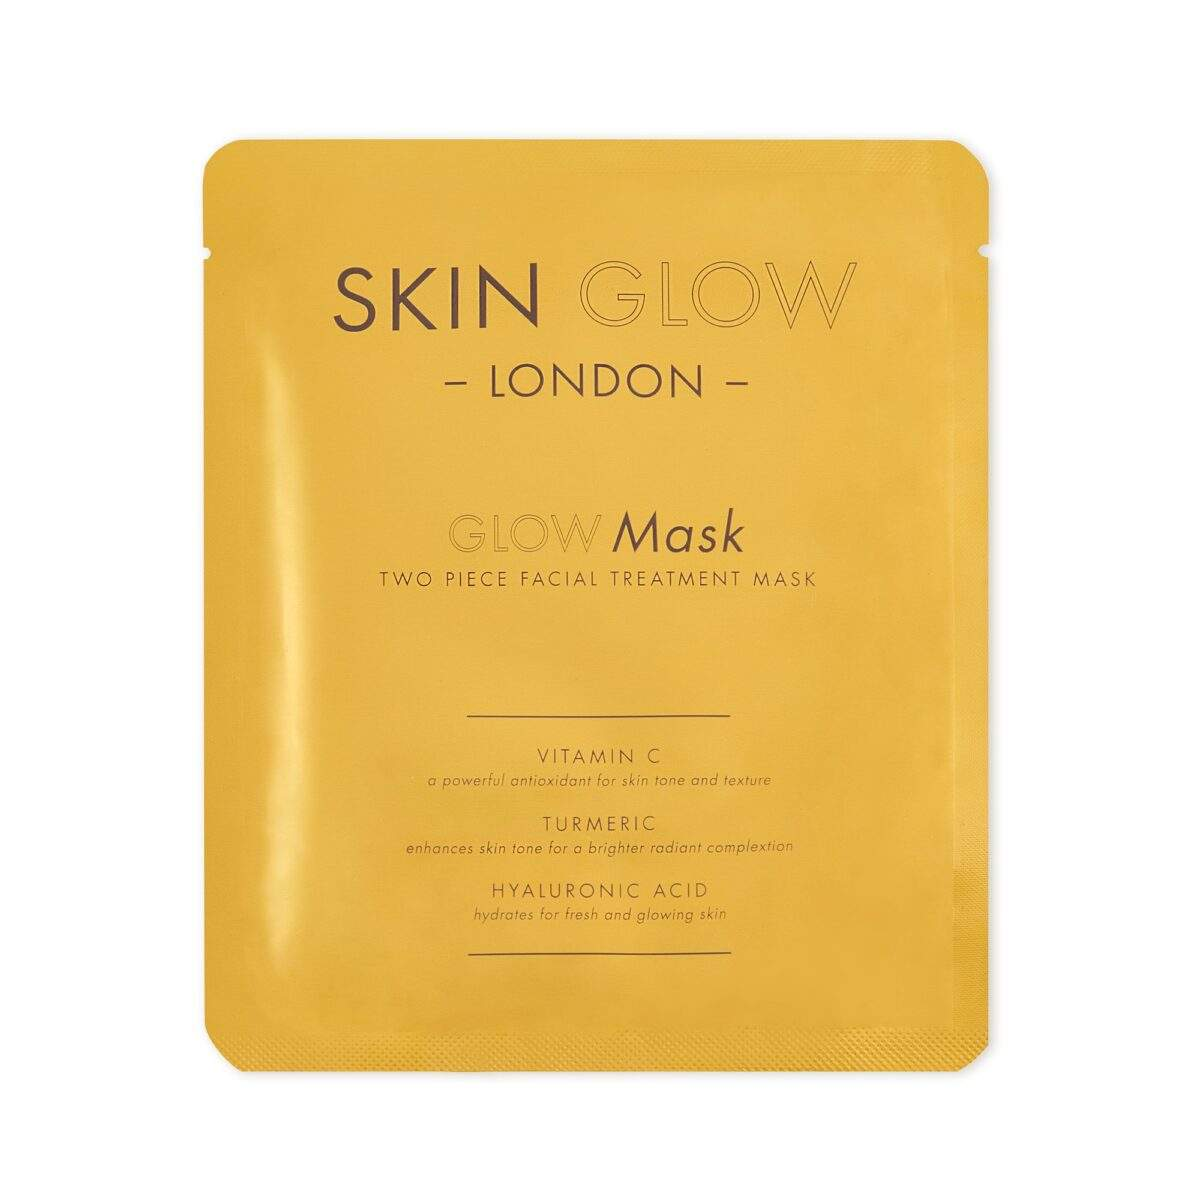 Skin Glow London Glow Mask - Two piece facial treatment mask Skin Glow London Glow Mask - Two piece facial treatment mask 1